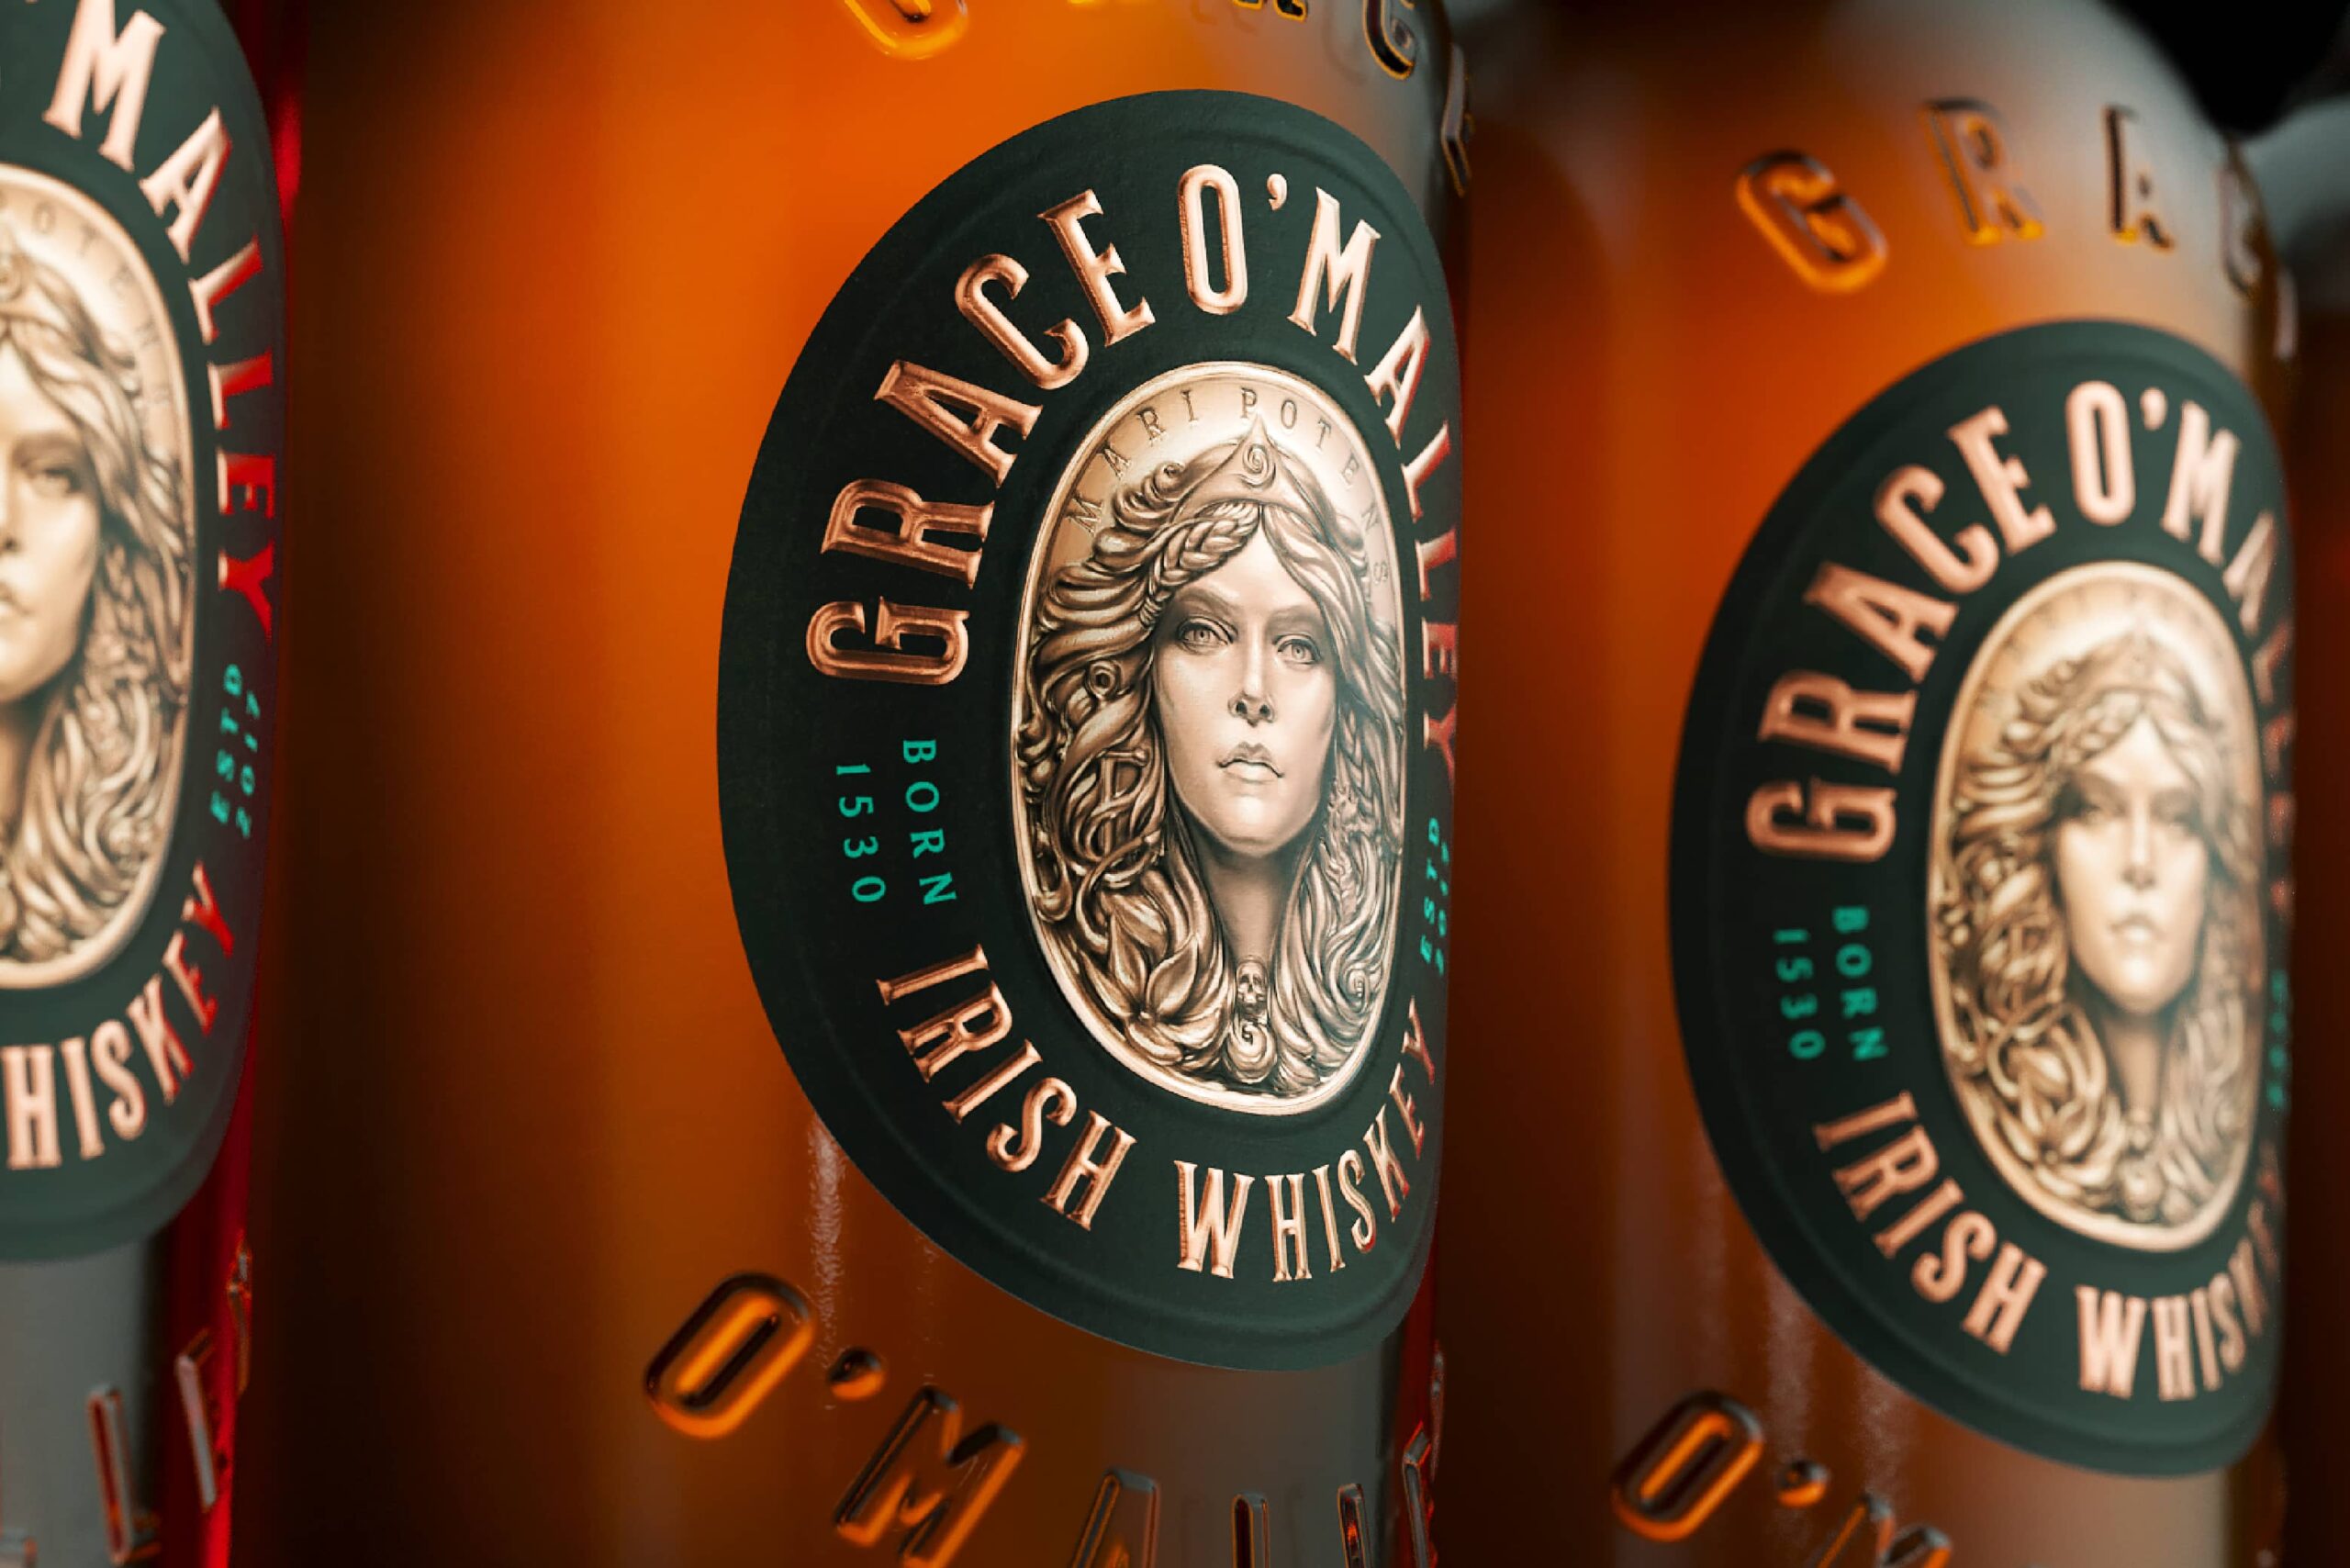 Grace O'Malley Whiskey: A Blend of Premium Taste and Legendary Irish Storytelling in Packaging Design